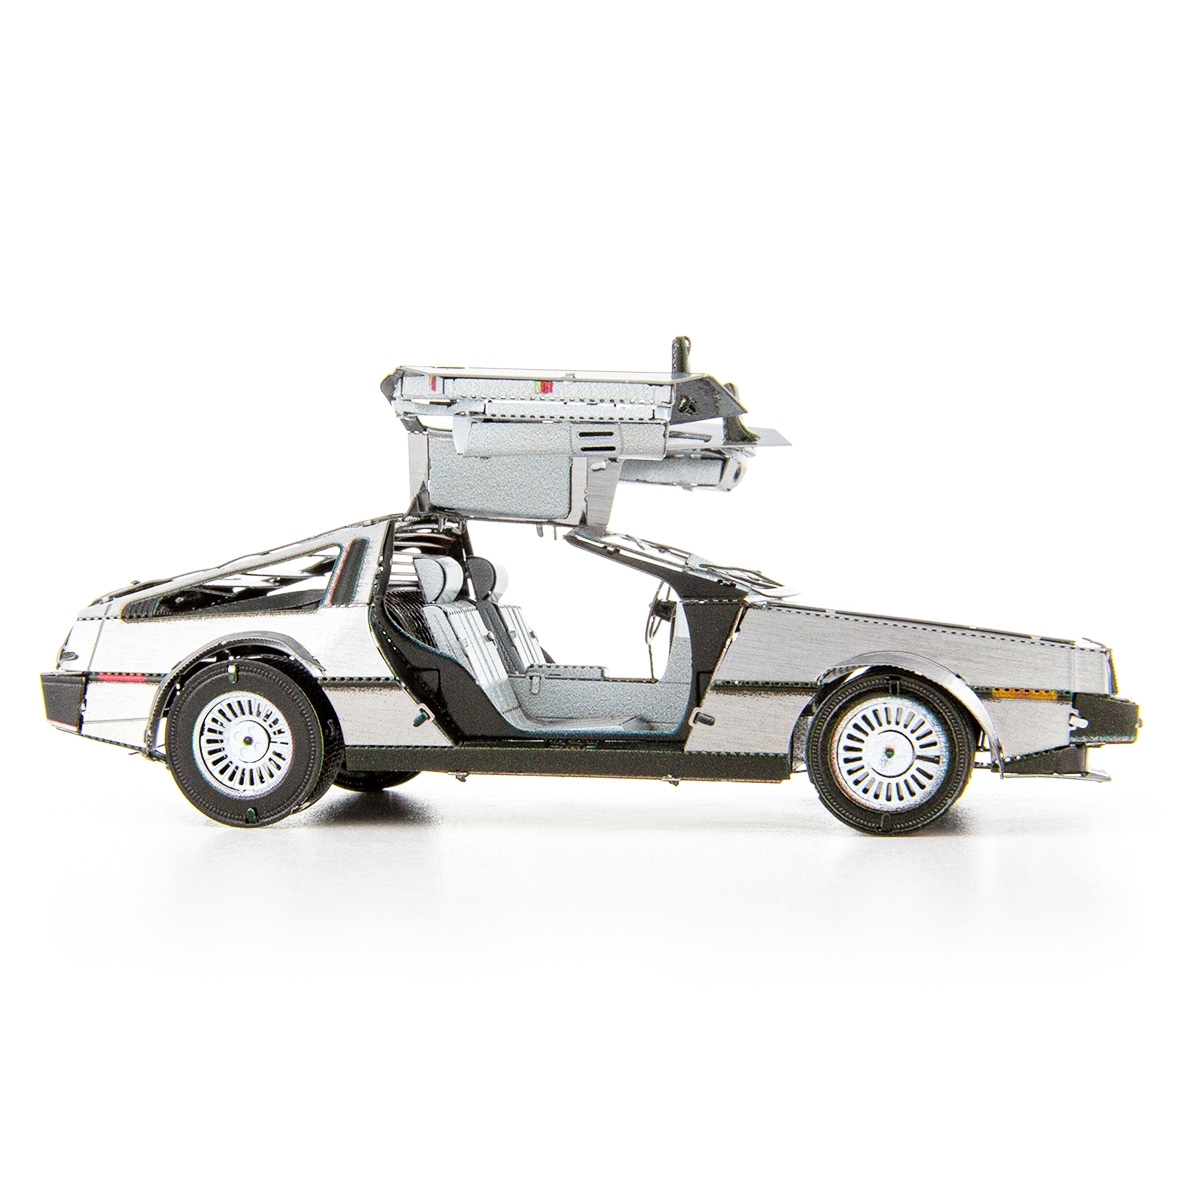 Fascinations DeLorean Back To The Future Car Metal Earth 3D Model New MMS181 